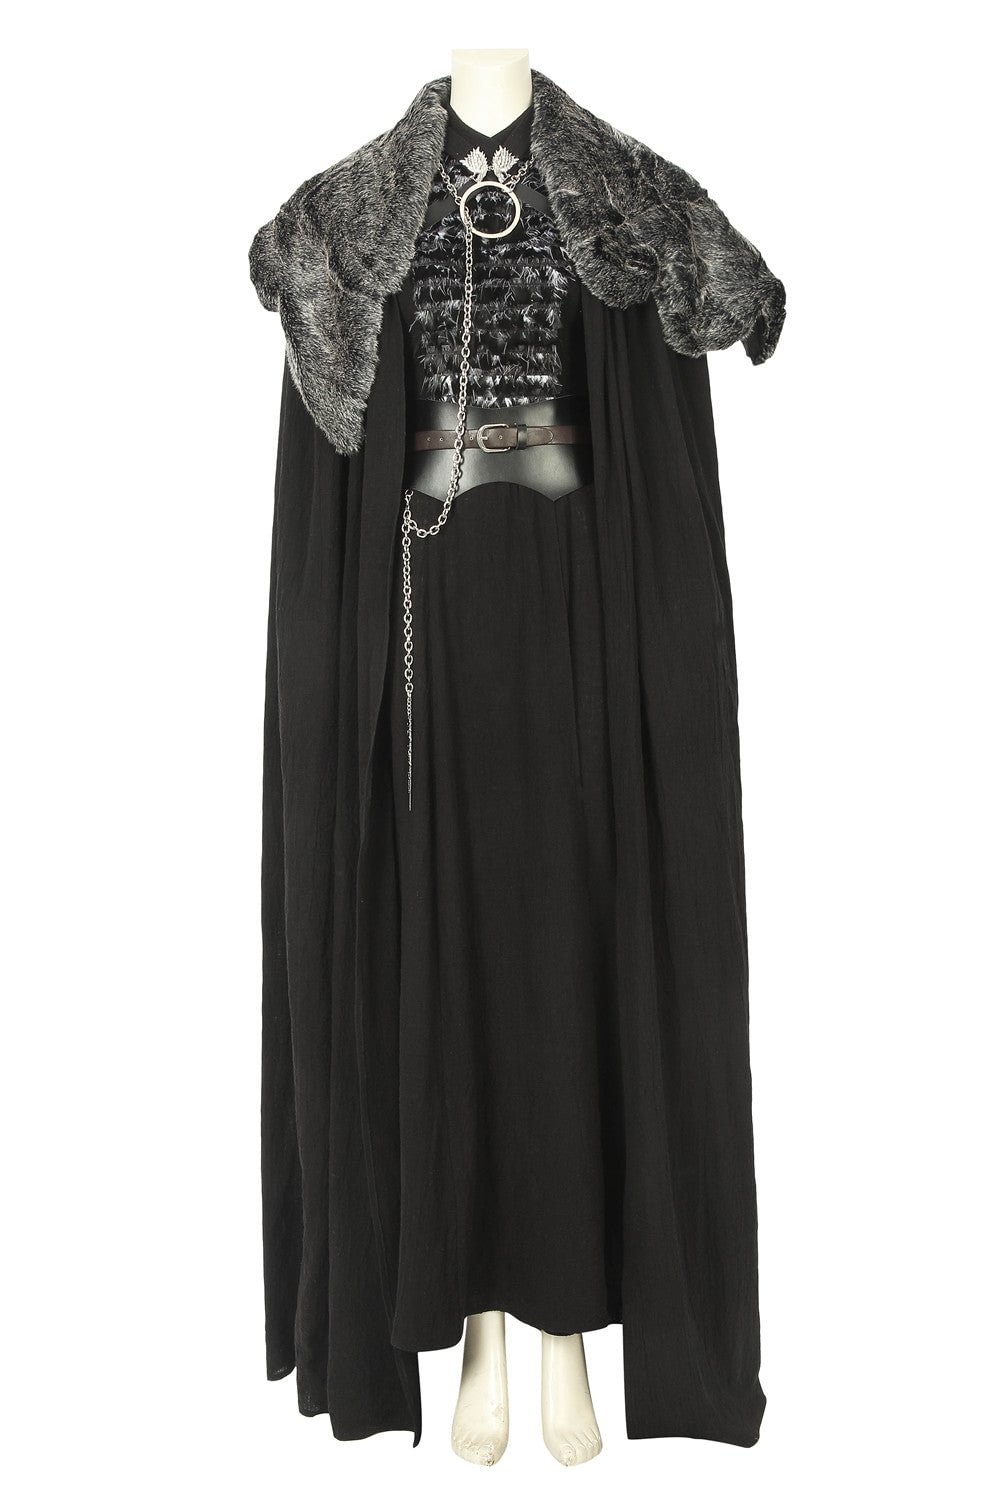 Sansa Stark Costume Game Of Thrones Season 8 Cosplay Suits